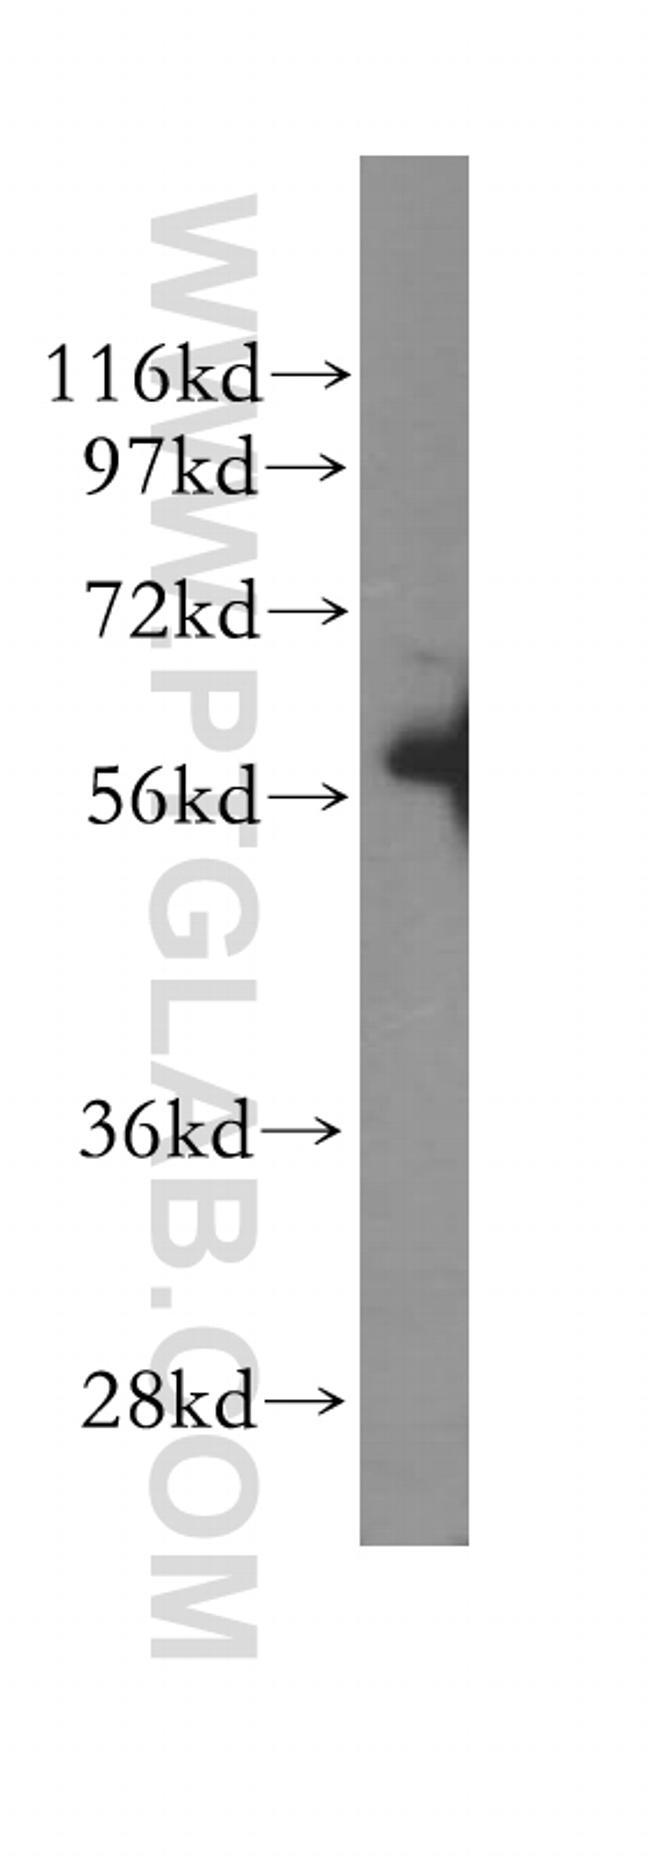 SESN3 Antibody in Western Blot (WB)